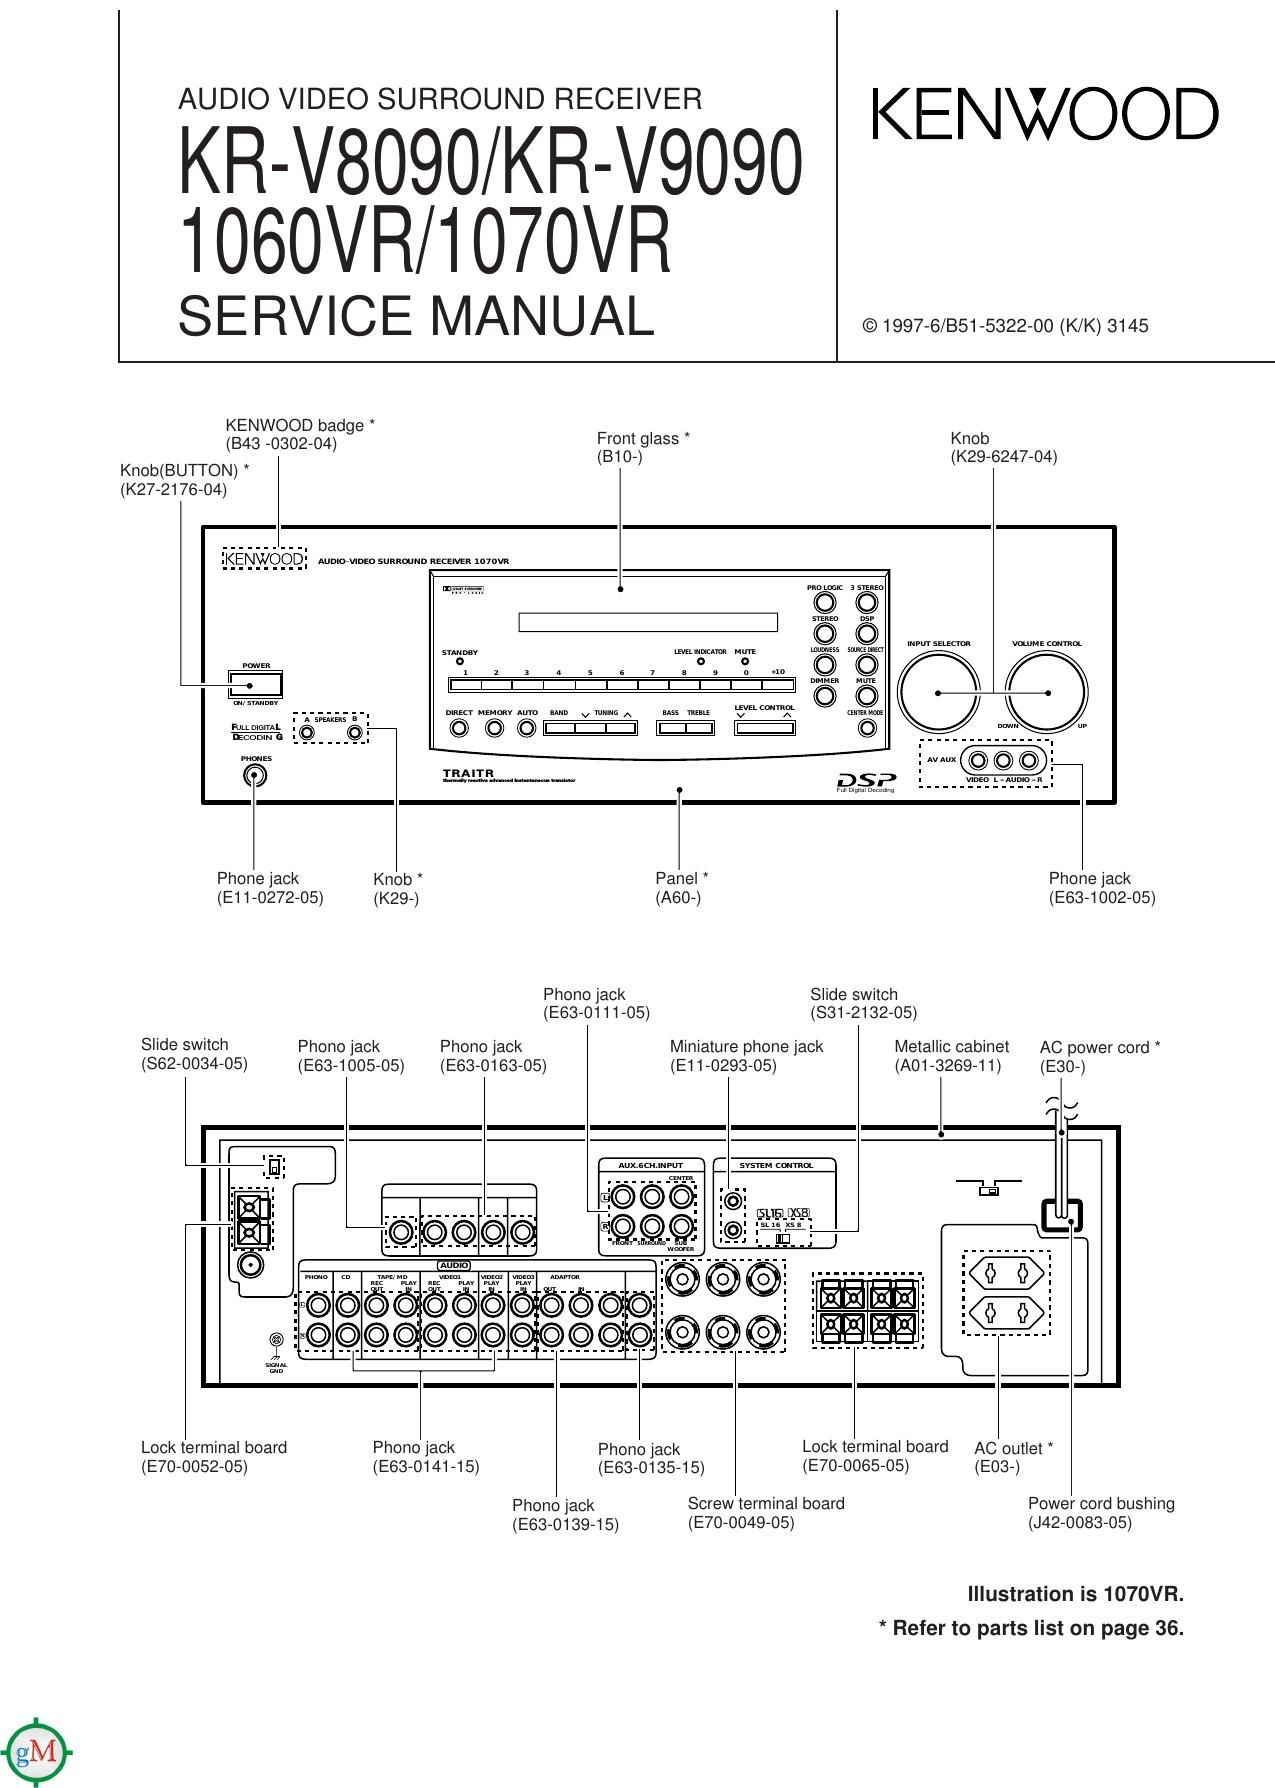 Kenwood 1070 VR Service Manual